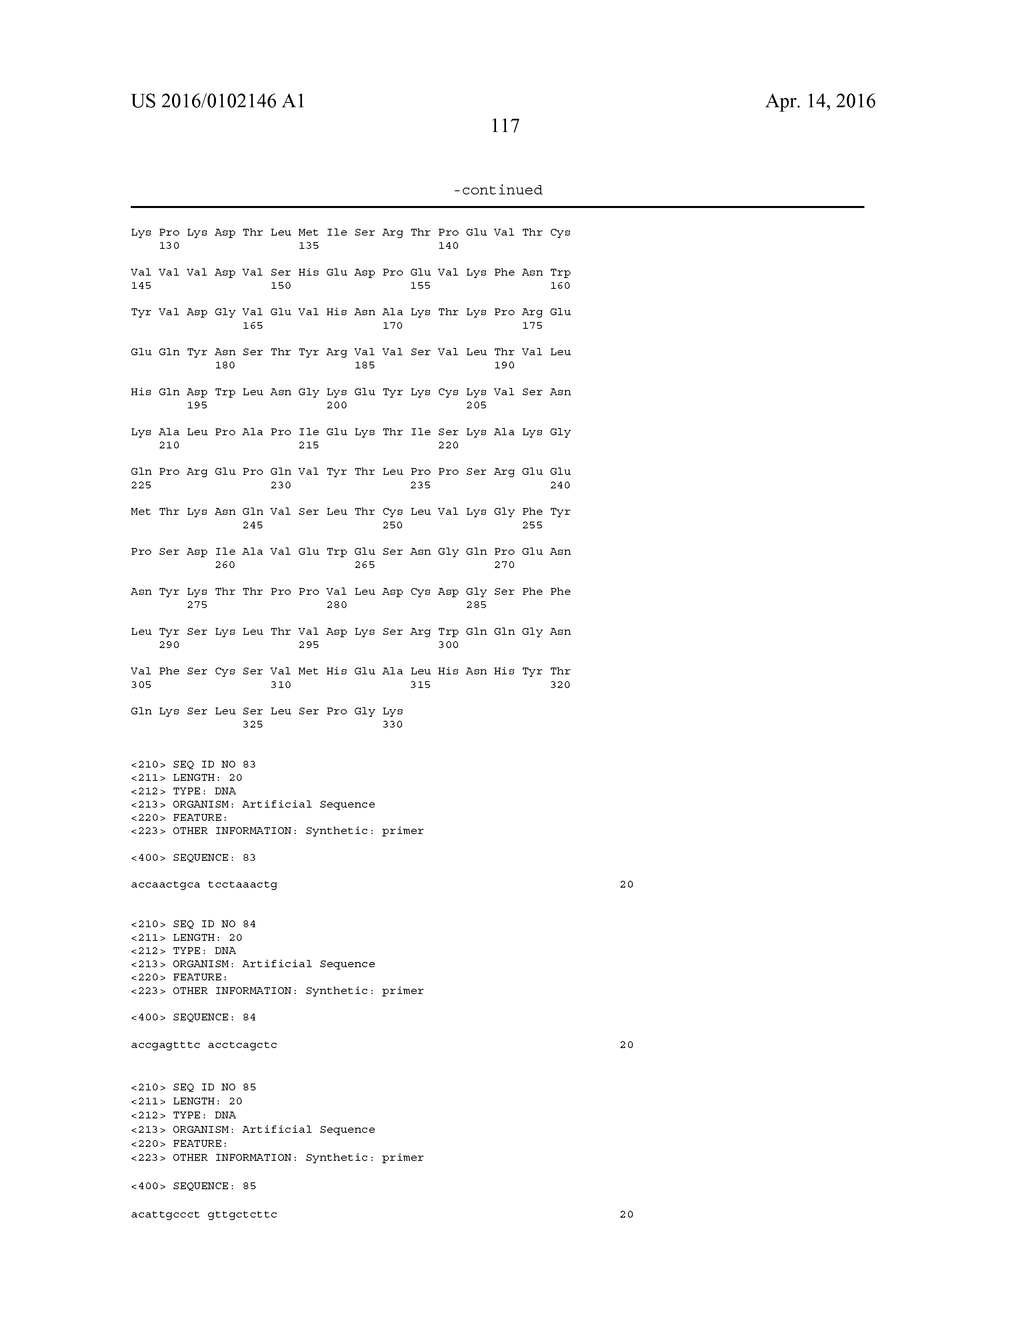 ANTI-LGR5 ANTIBODIES AND IMMUNOCONJUGATES - diagram, schematic, and image 154